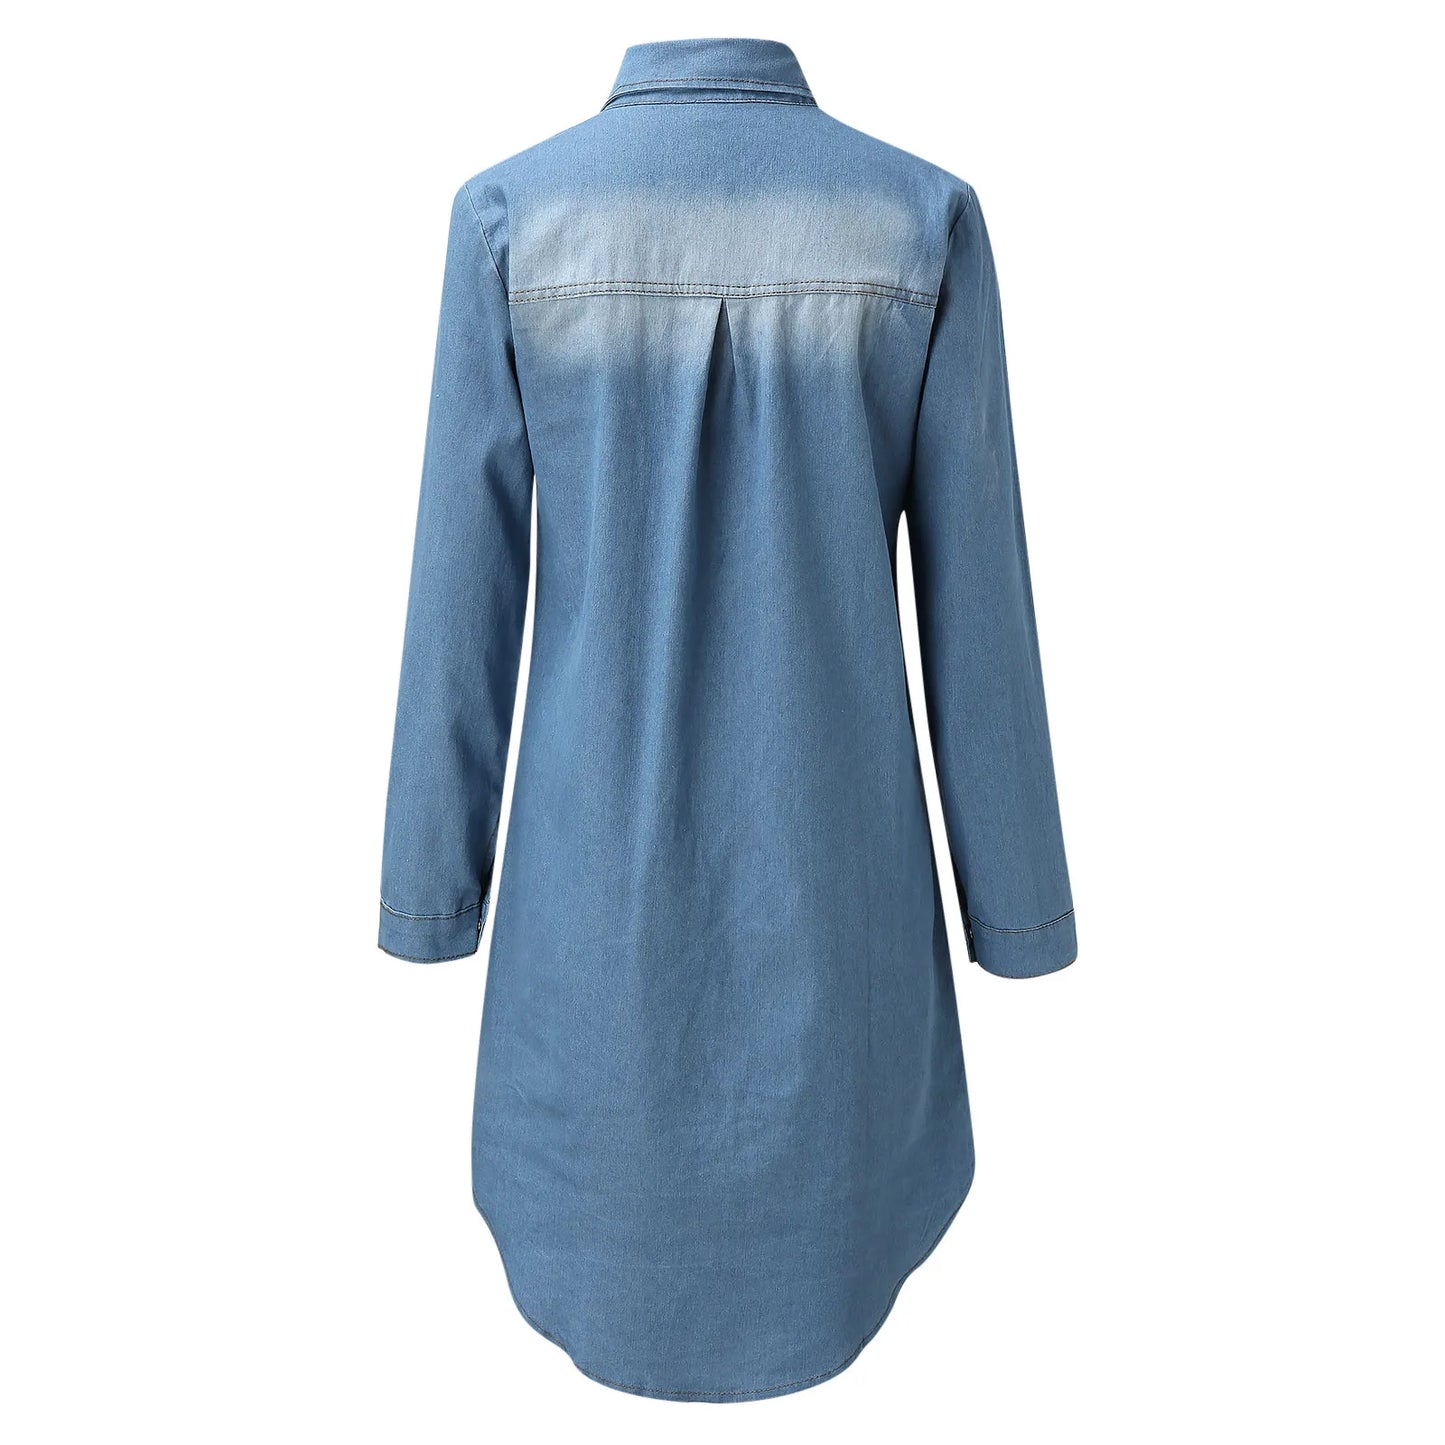 FashionSierra - Fashionable Short Sleeve Midi Denim Slim Pockets Zipper Casual Party Summer Dress